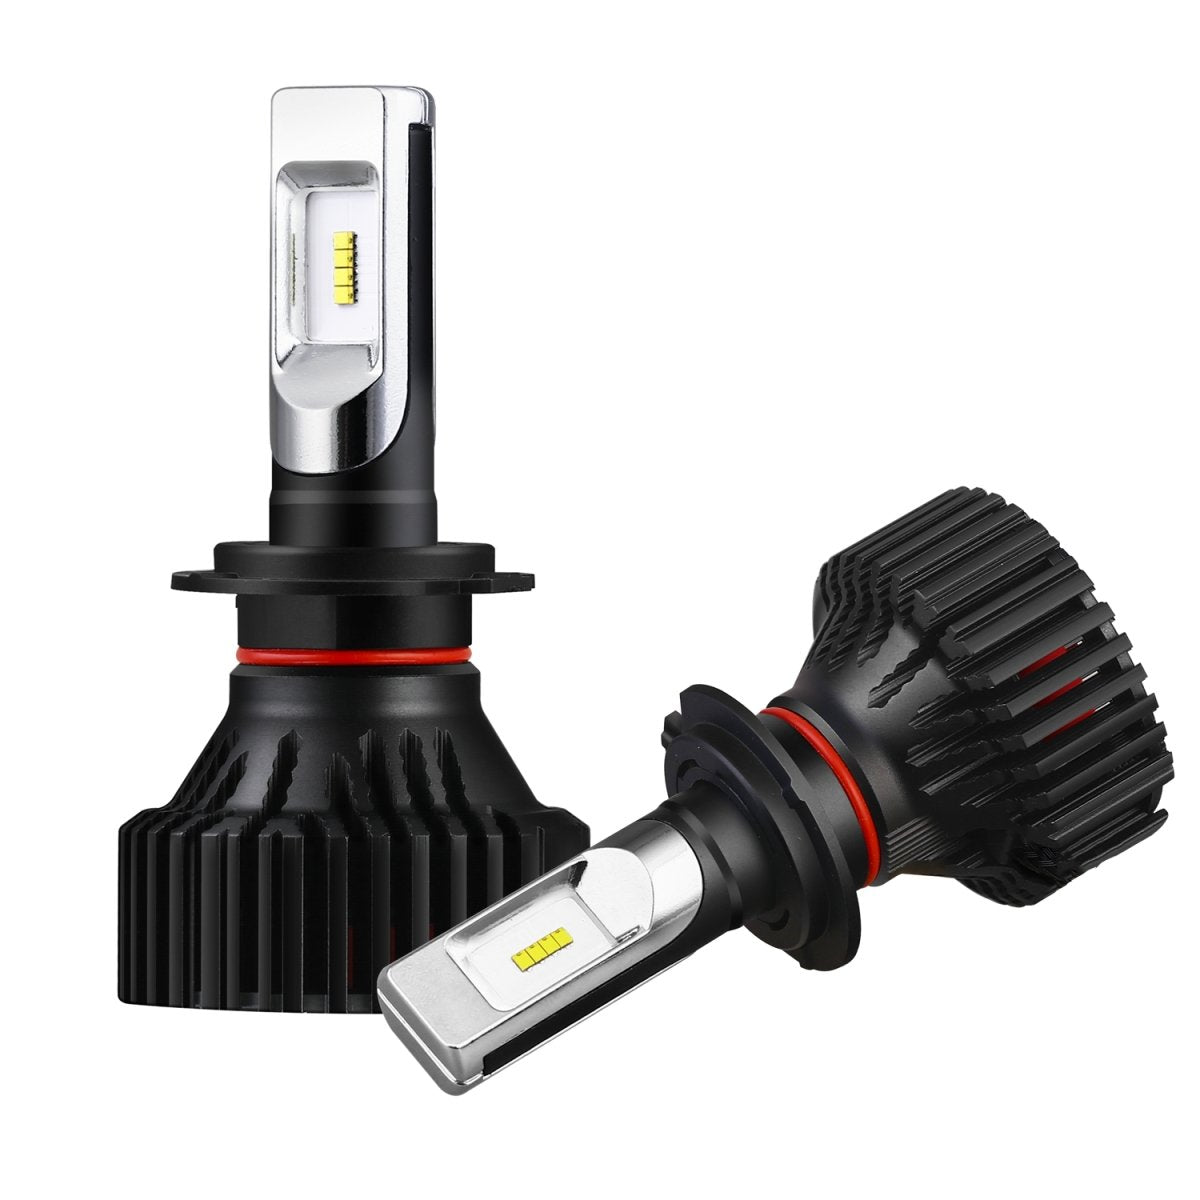 Osram h4 spare bulb kit - 13,20 EUR